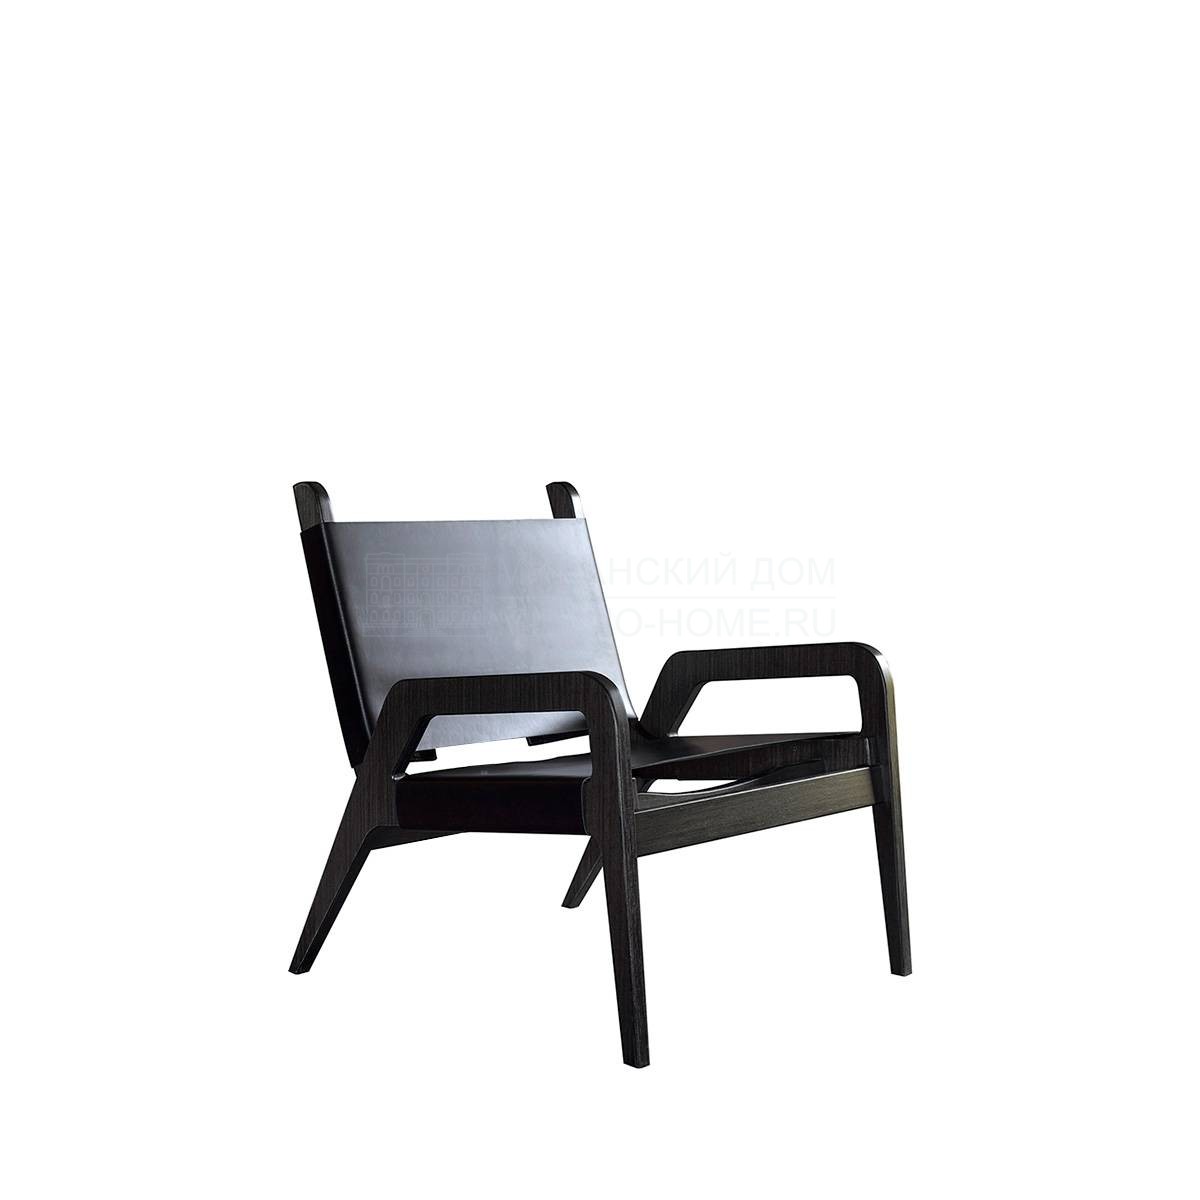 Кресло Oslo/S1830 из Испании фабрики COLECCION ALEXANDRA